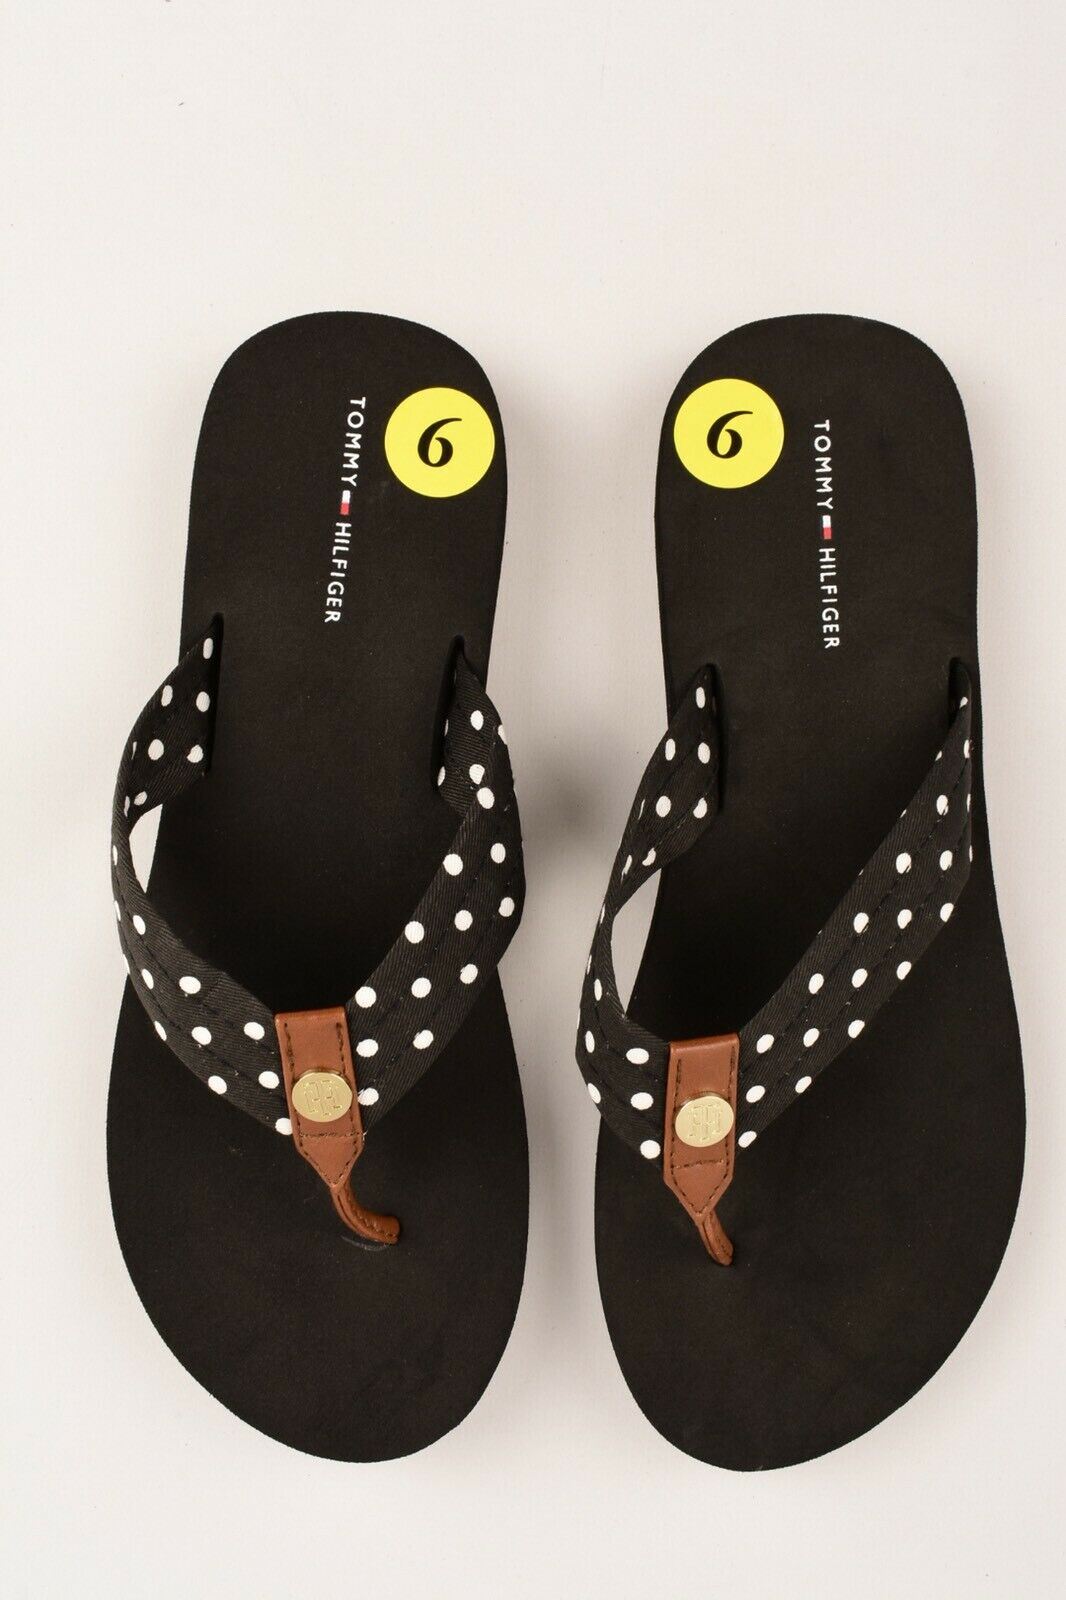 TOMMY HILFIGER Women's CAPTIO-T Flip Flops Sandals Black/Polka Dot, UK 4.5